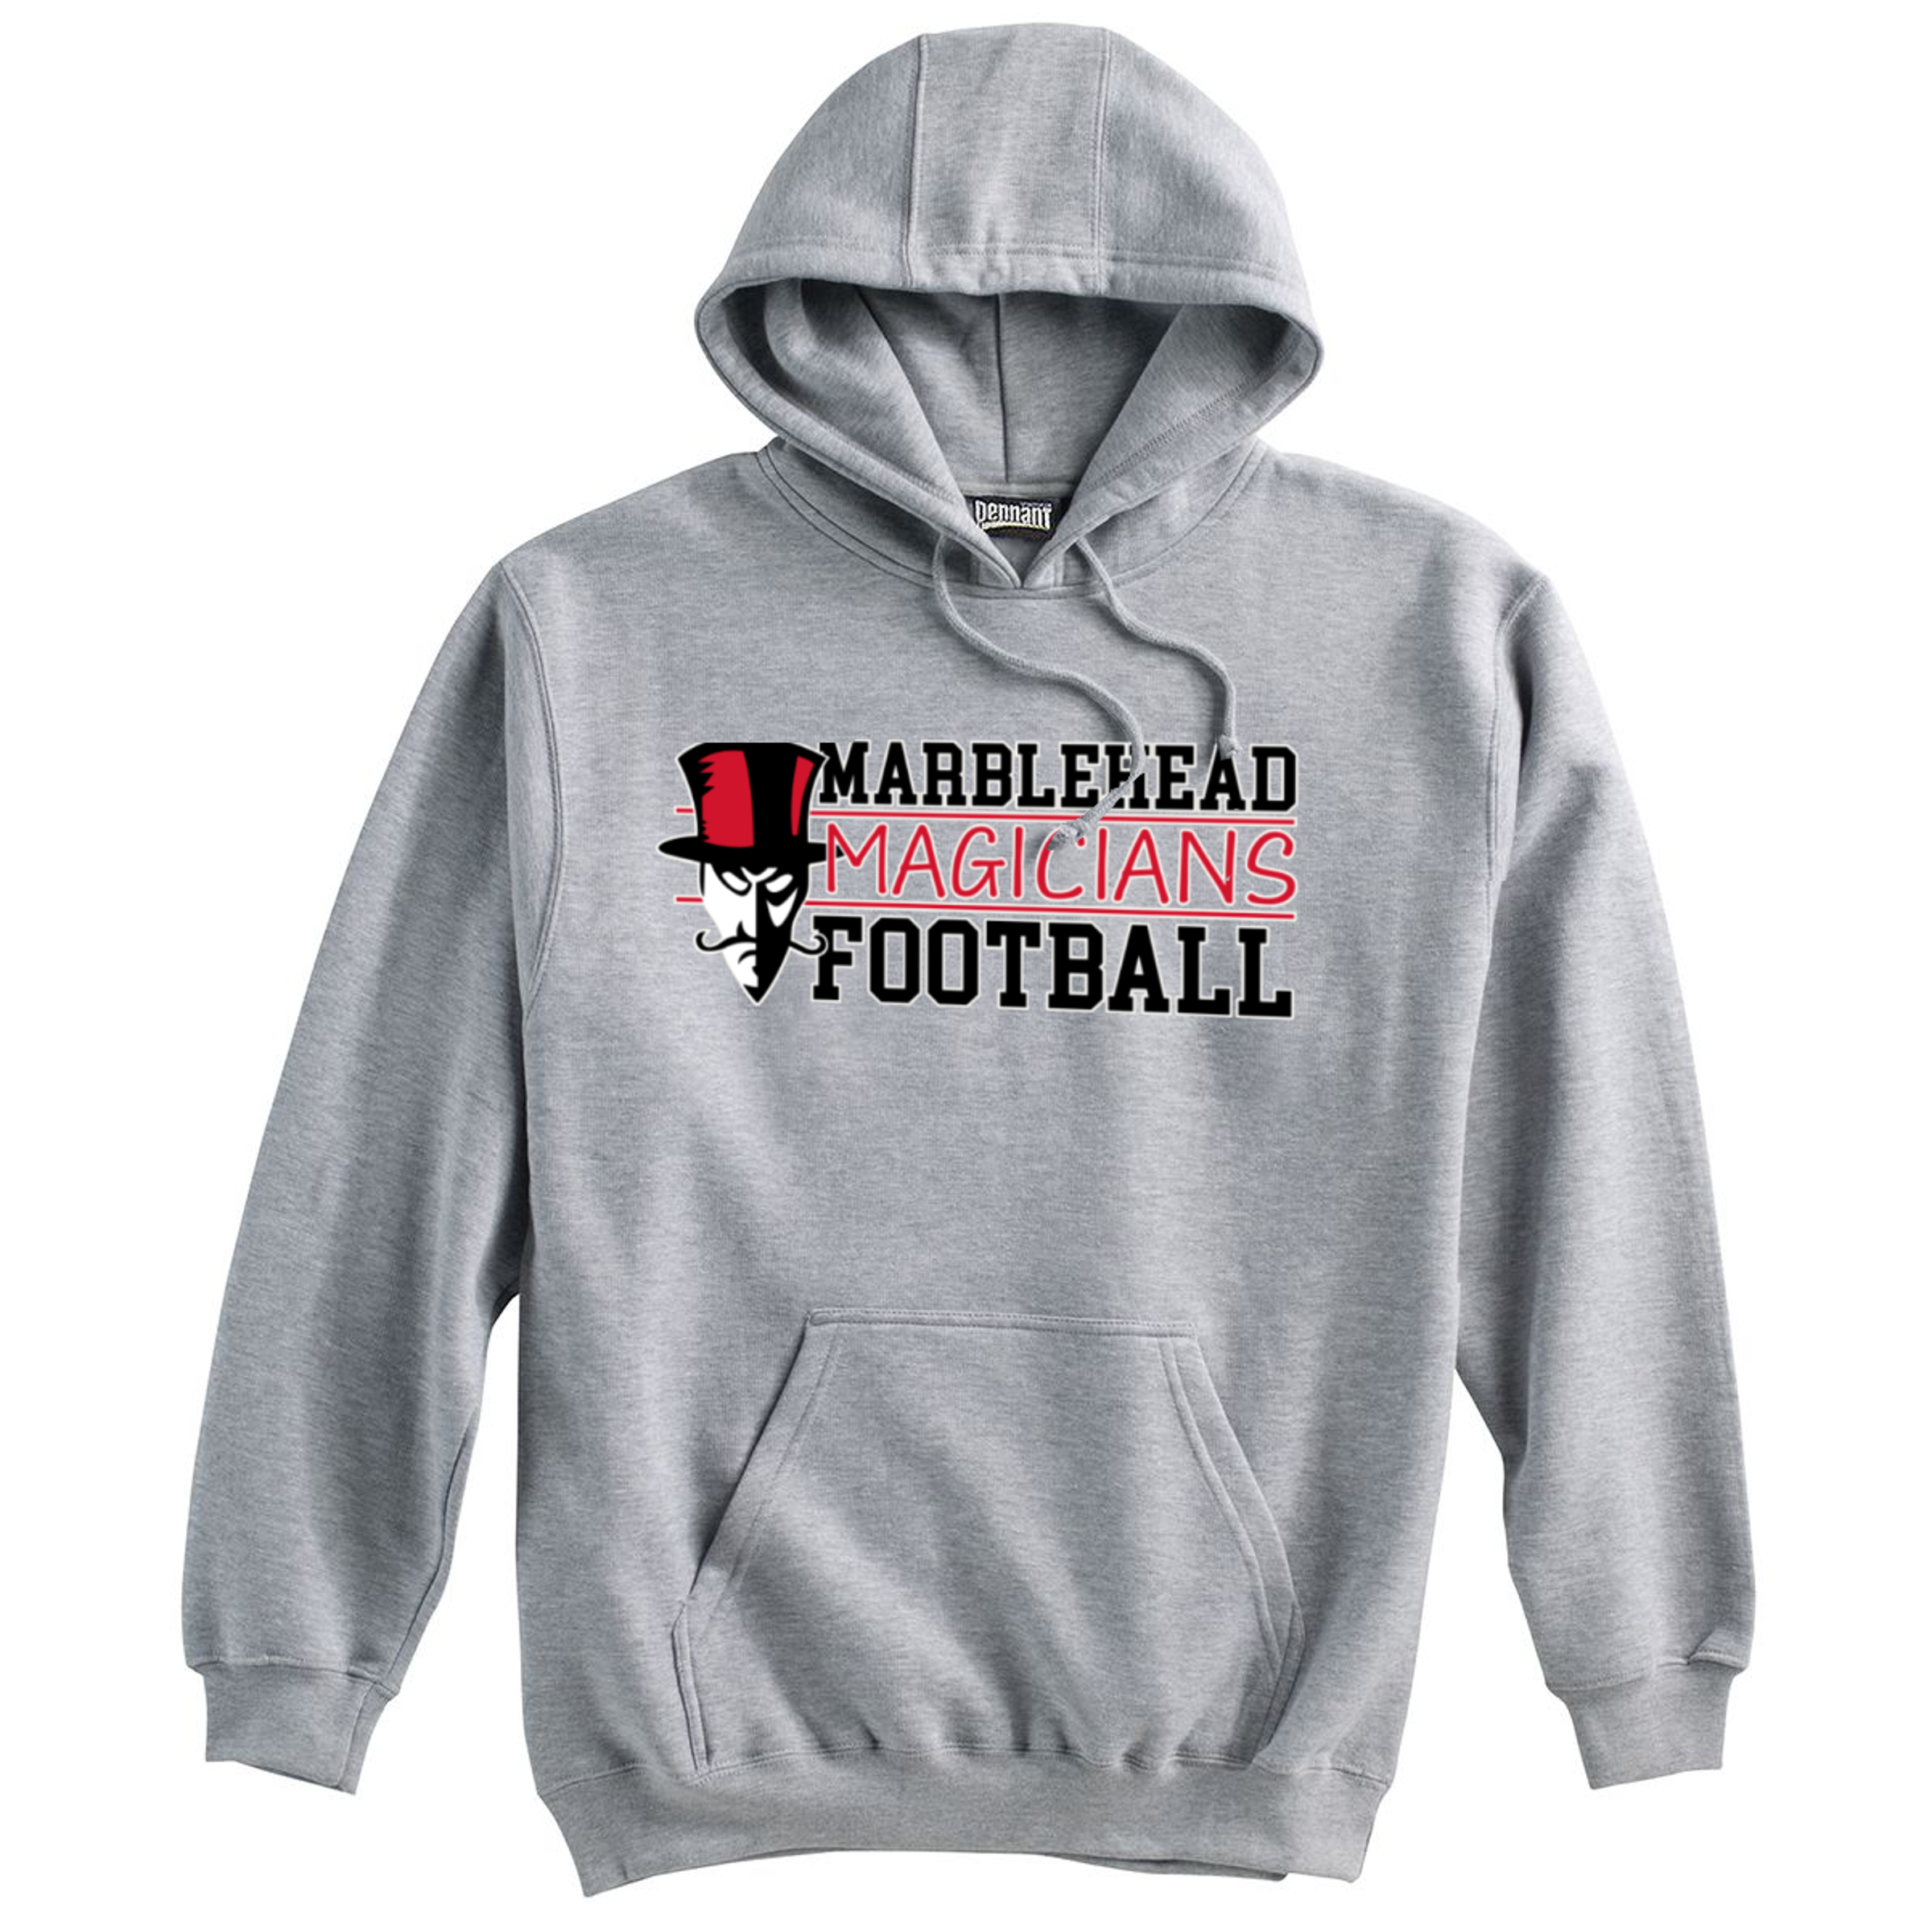 Marblehead Magicians Football Premium Hoodie